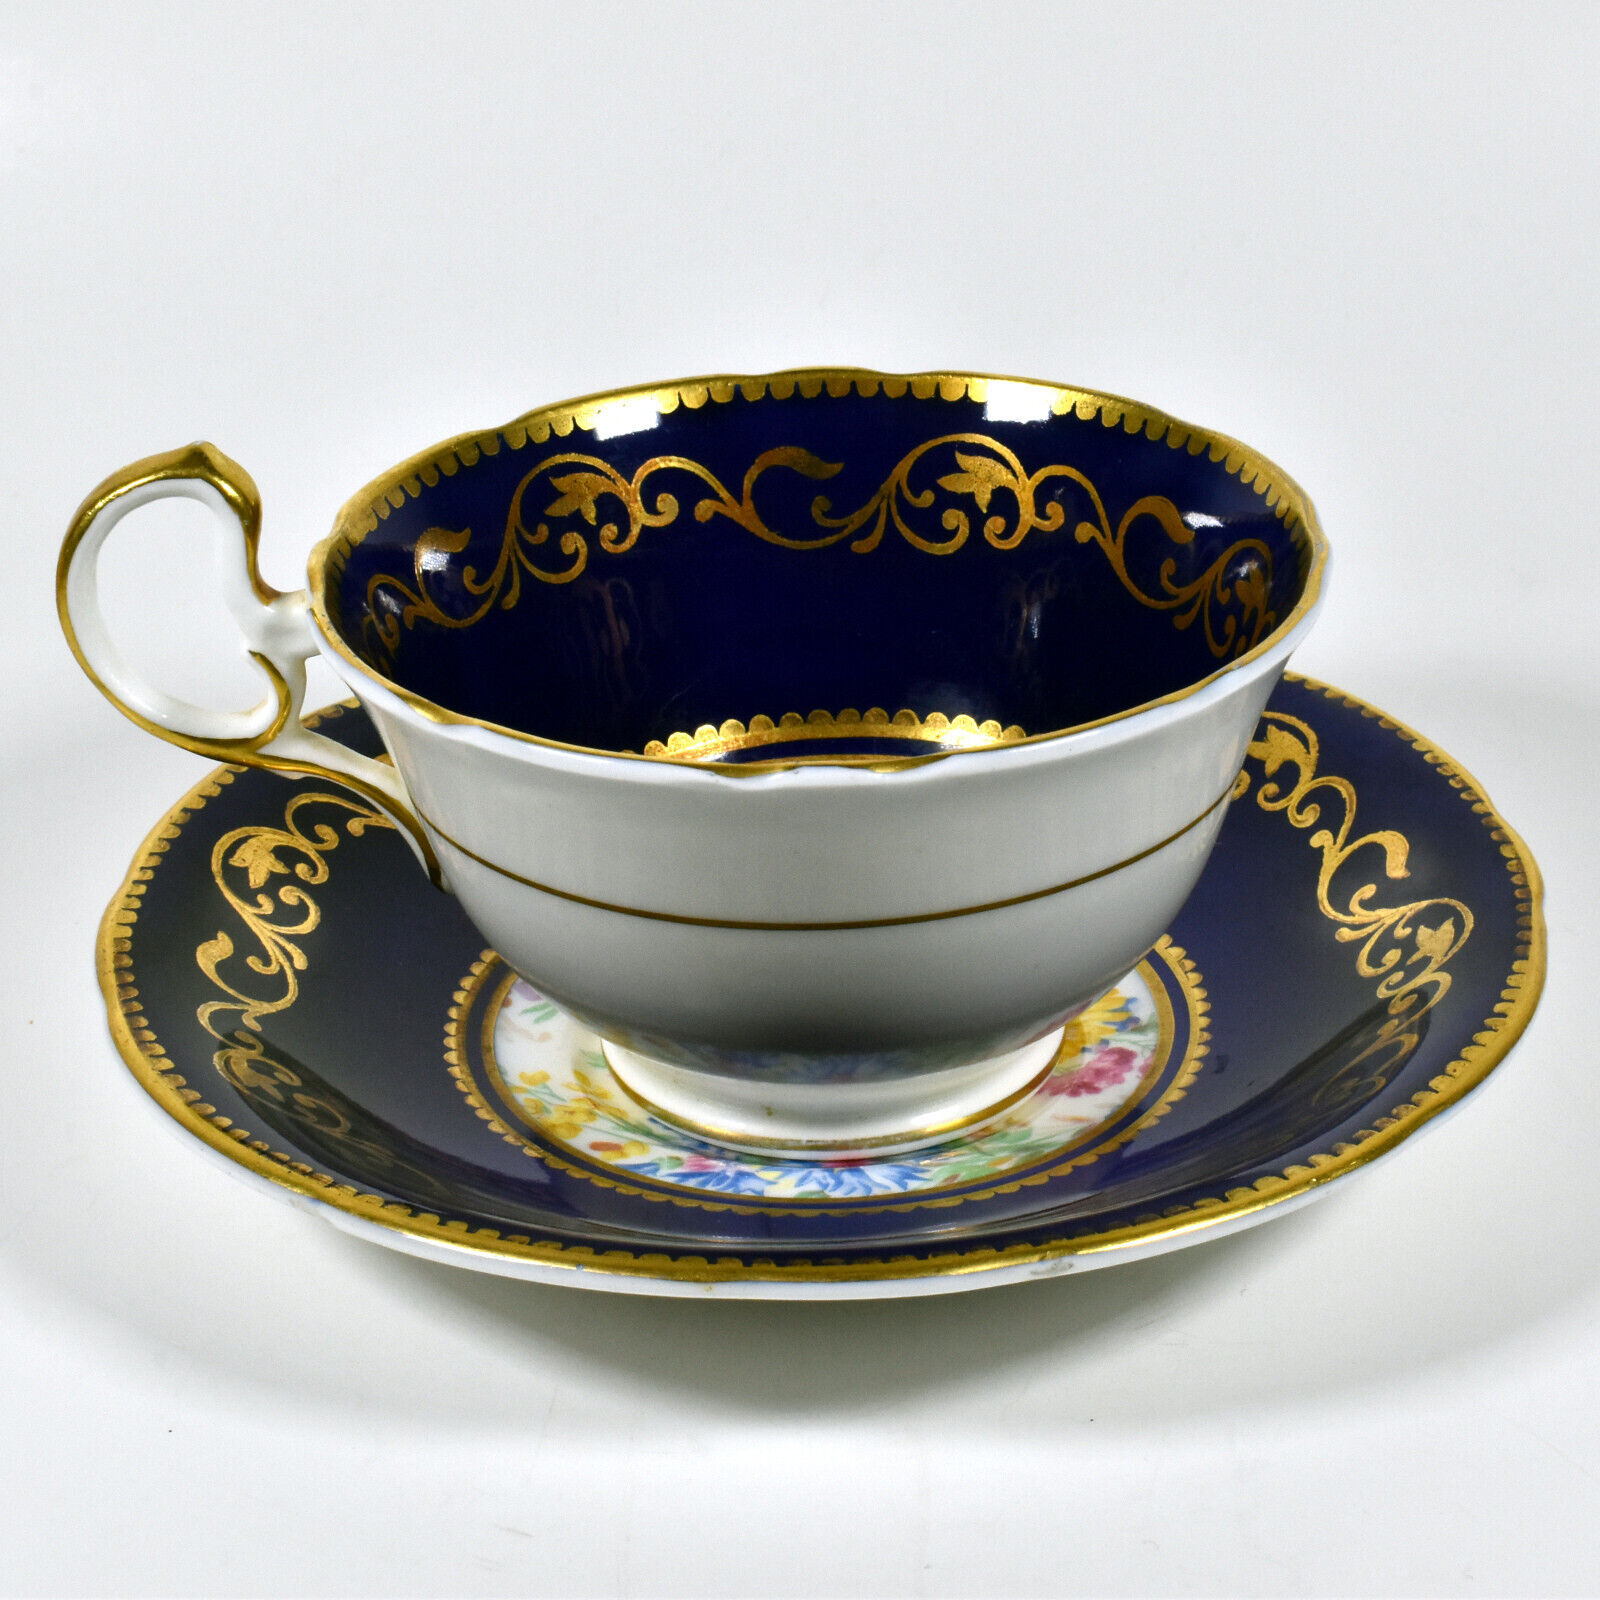 Aynsley English Bone China Cobalt Blue and Gold Floral Teacup & Saucer